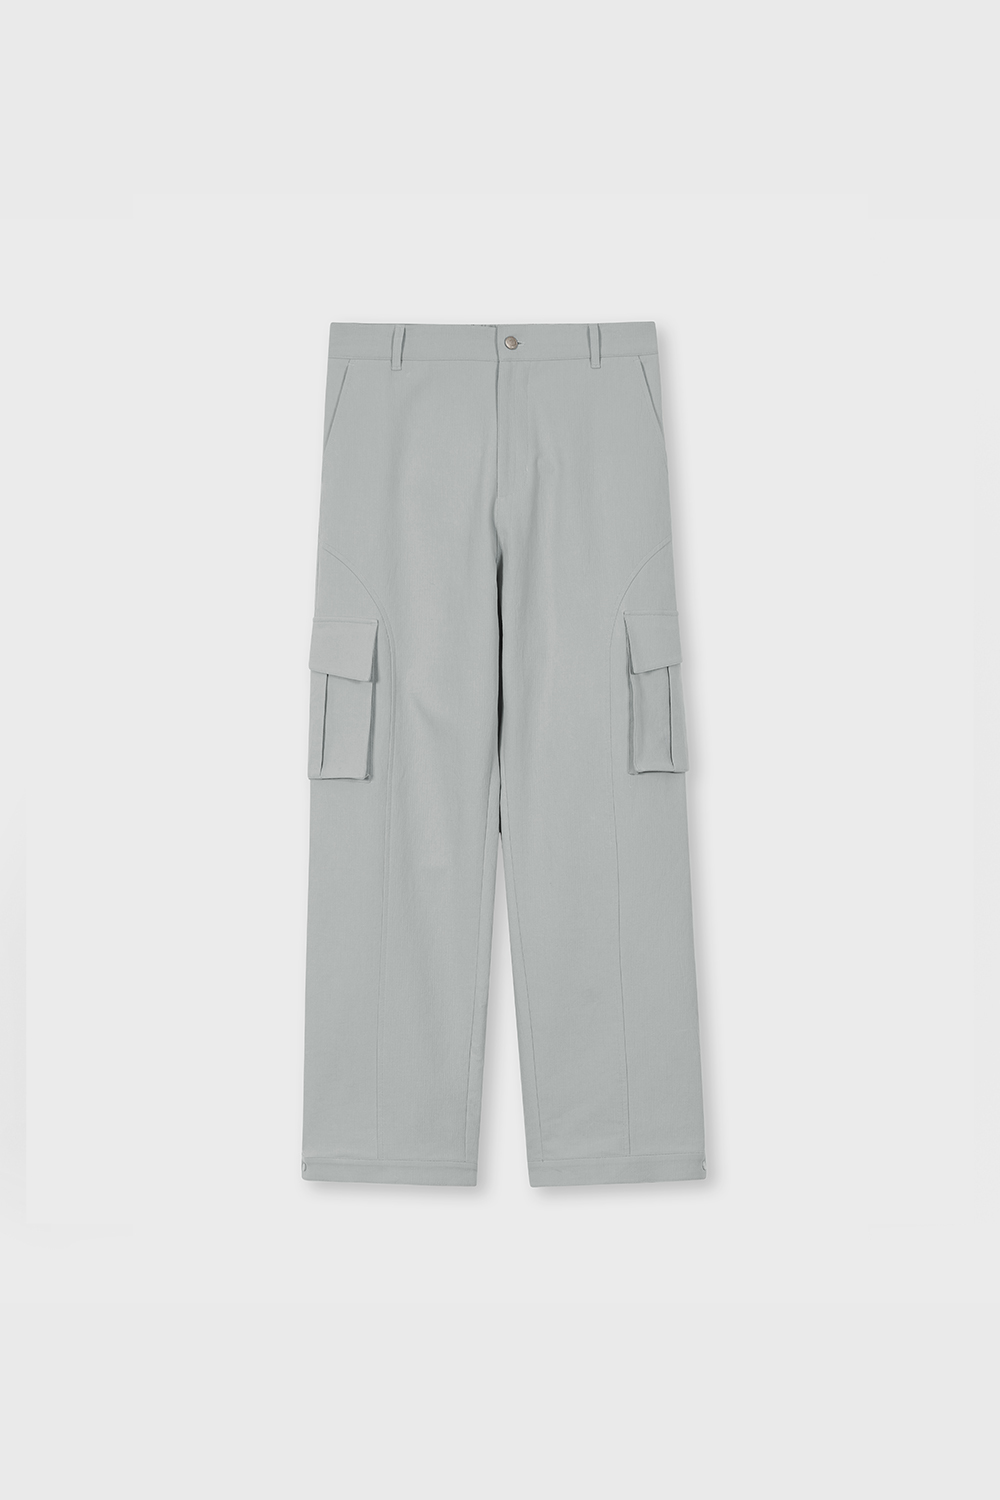 Parabola Line Cargo Pants (Ash Grey)